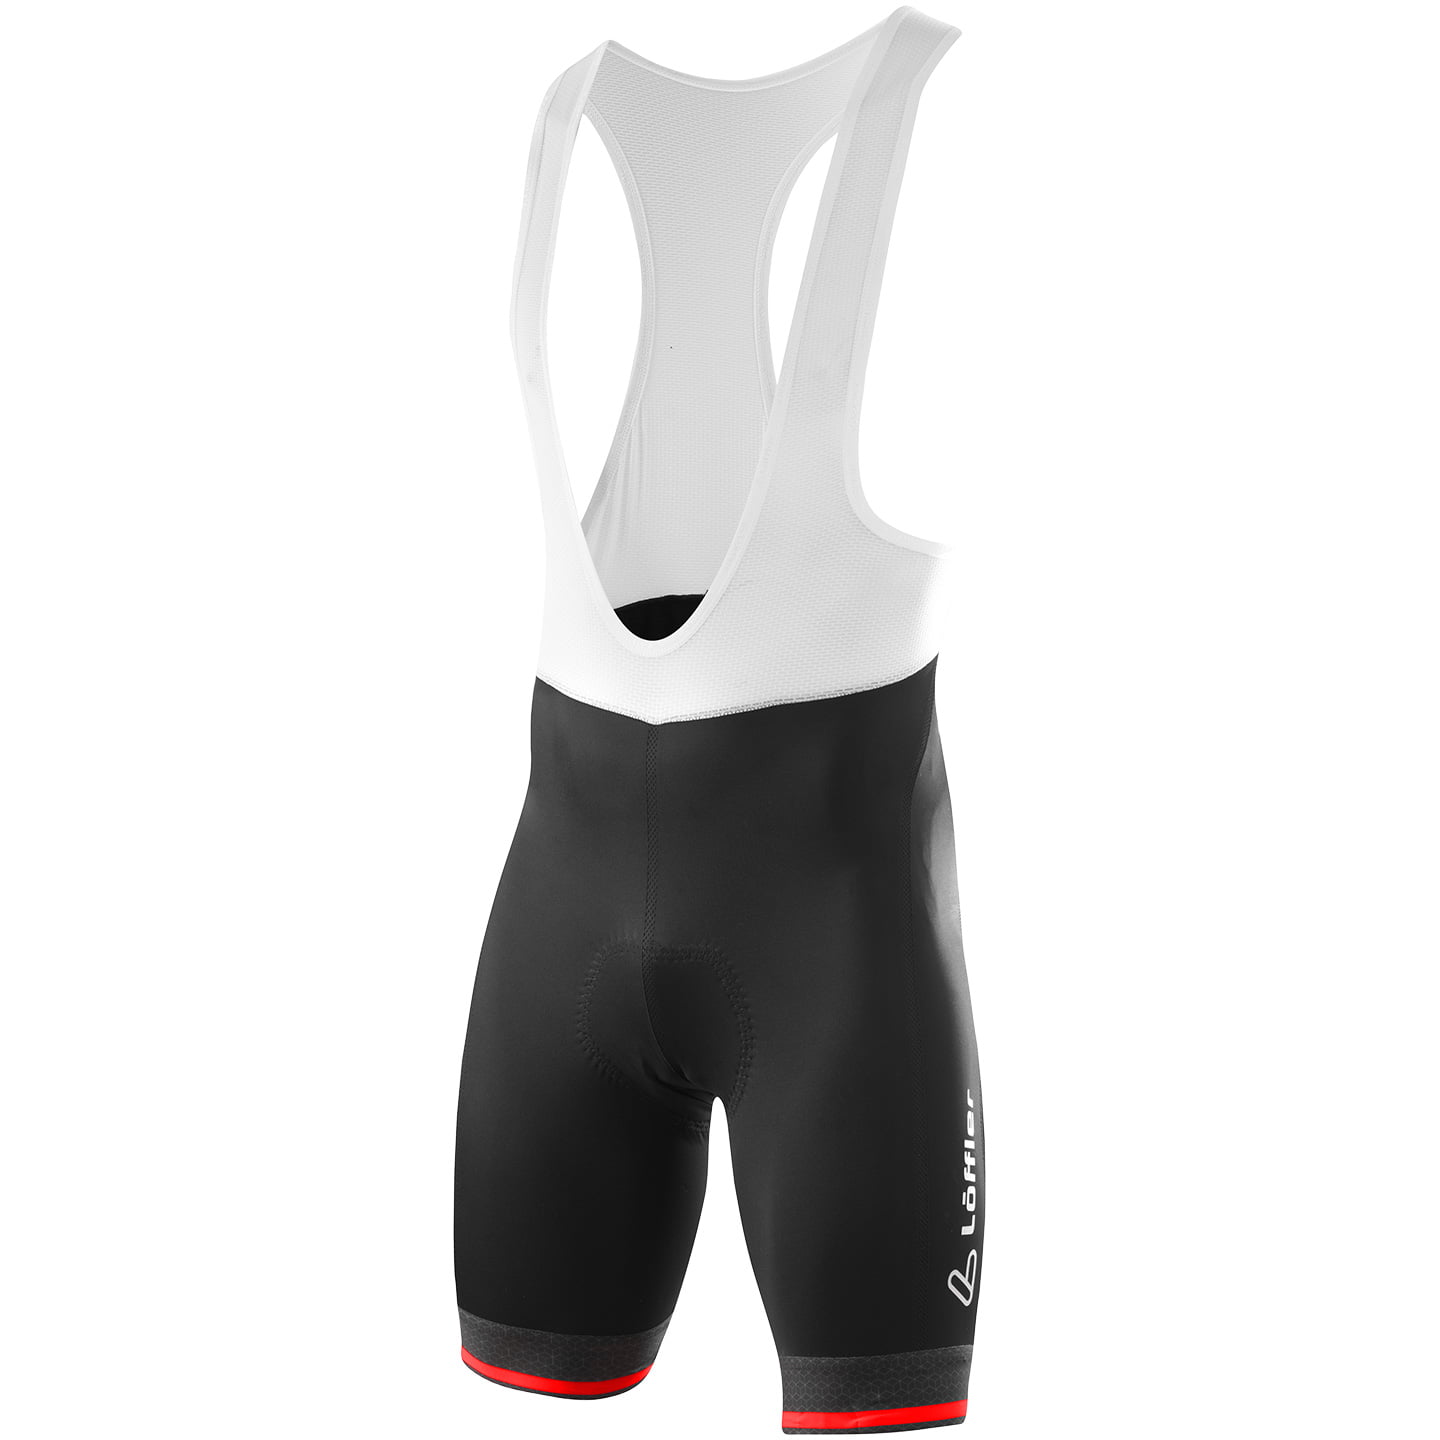 LOFFLER hotBOND Bib Shorts Bib Shorts, for men, size S, Cycle trousers, Cycle clothing